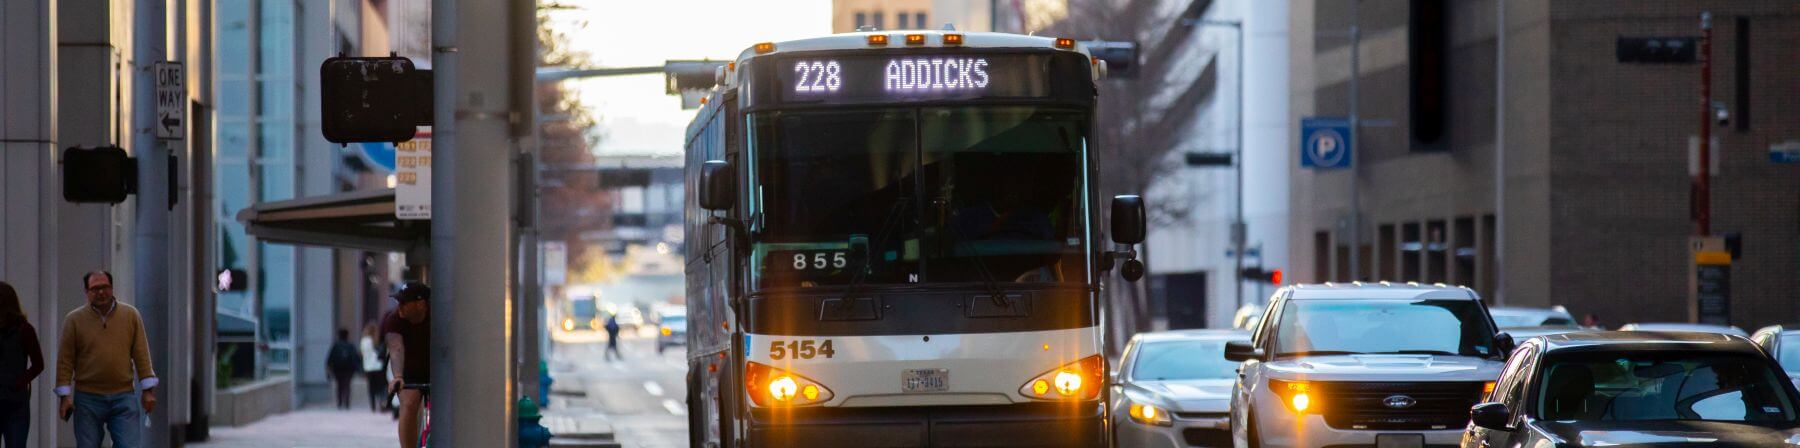 228 Kingsland / Addicks bus